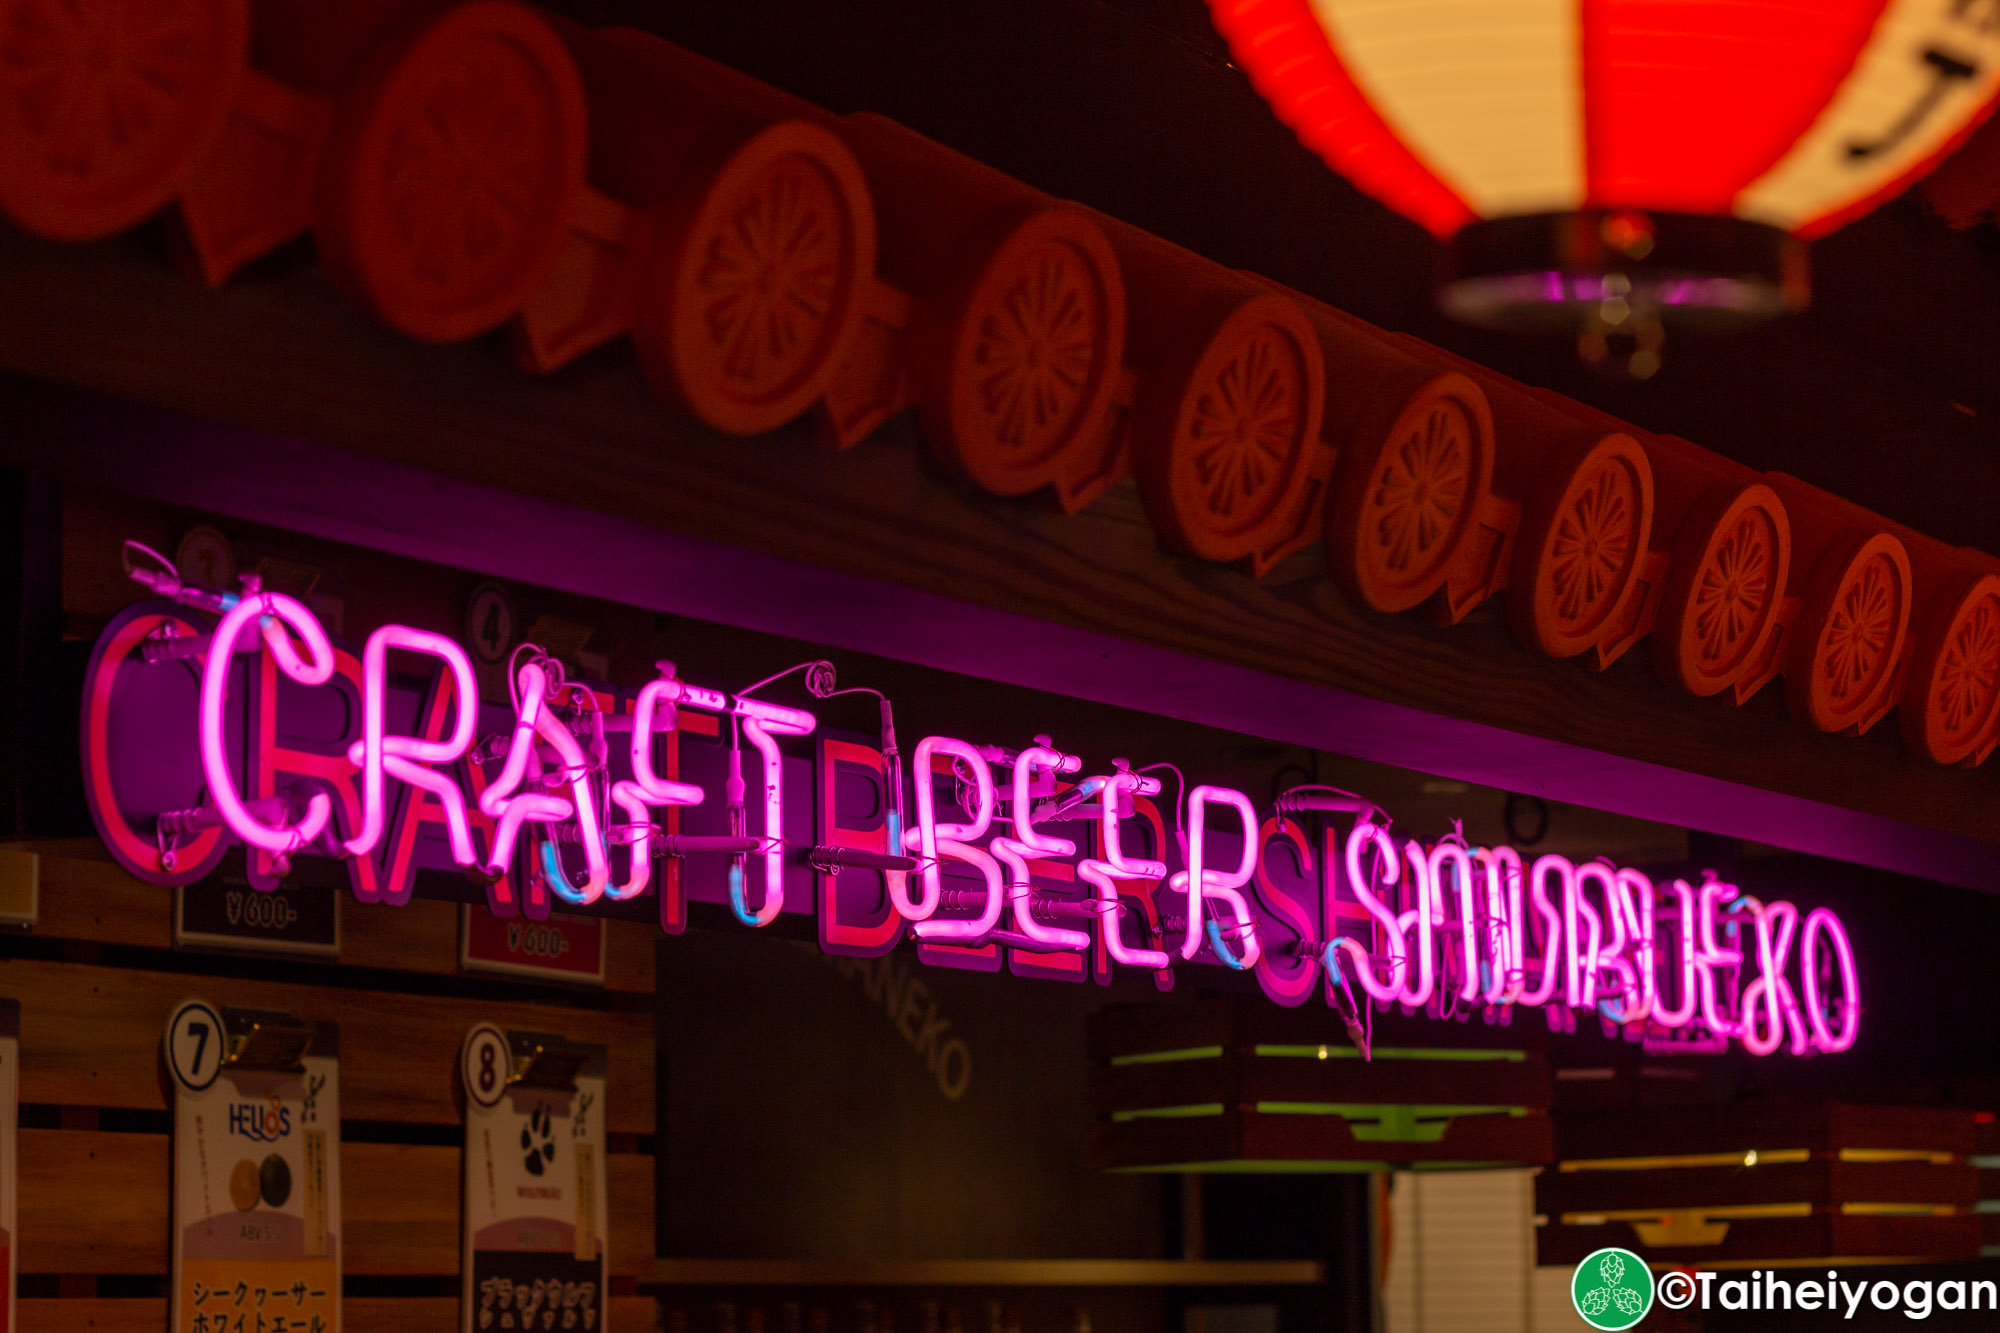 Craft Beer Shimaneko・クラフトビール しまねこ - Entrance - Sign